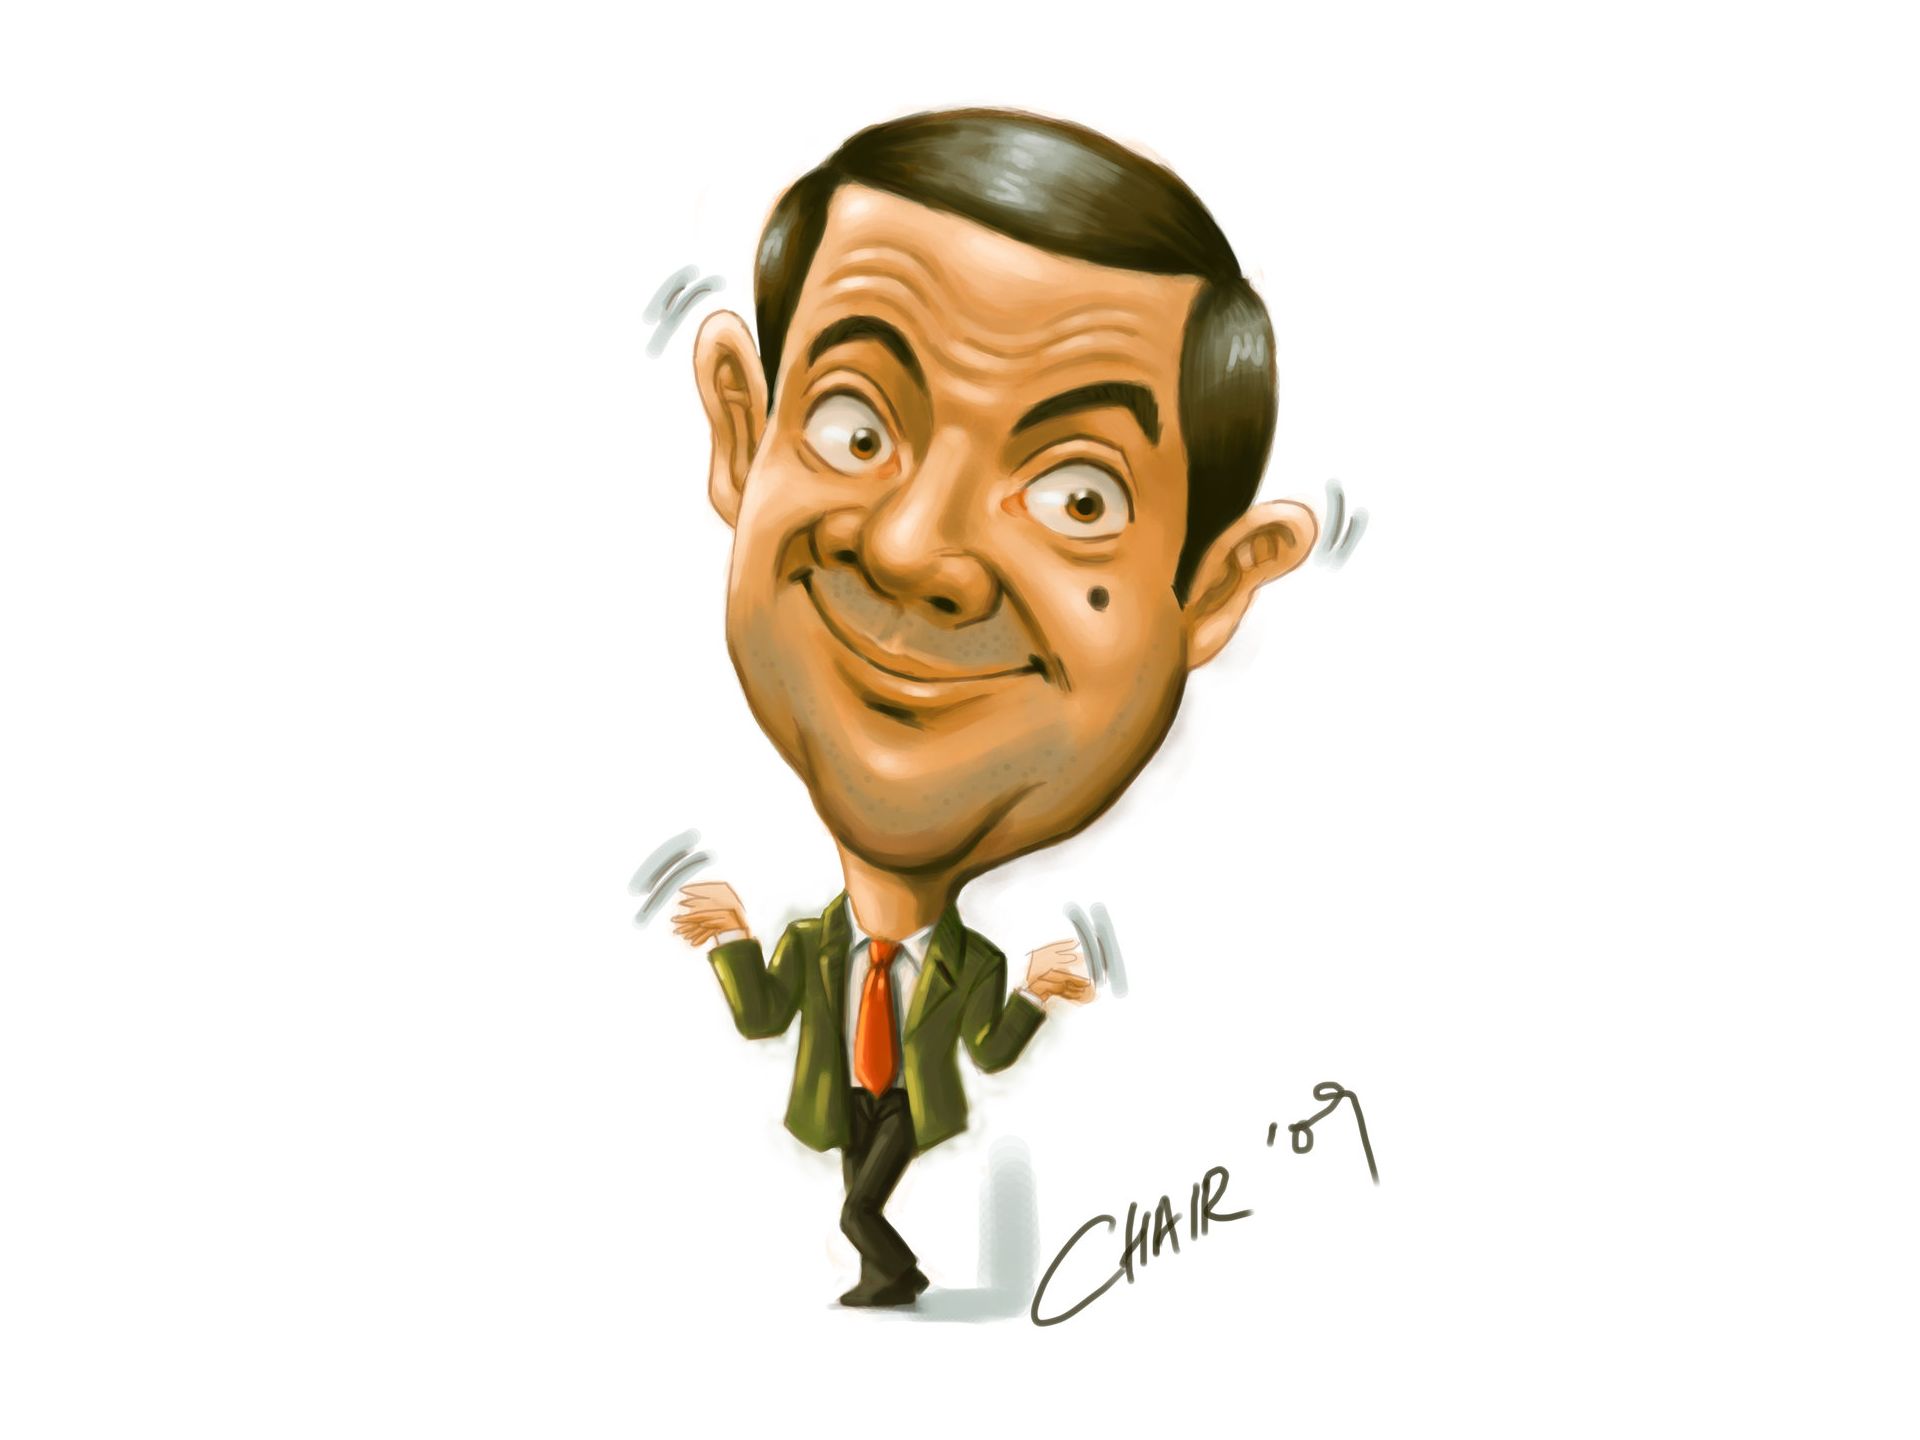 TV Show Mr. Bean HD Wallpaper | Background Image